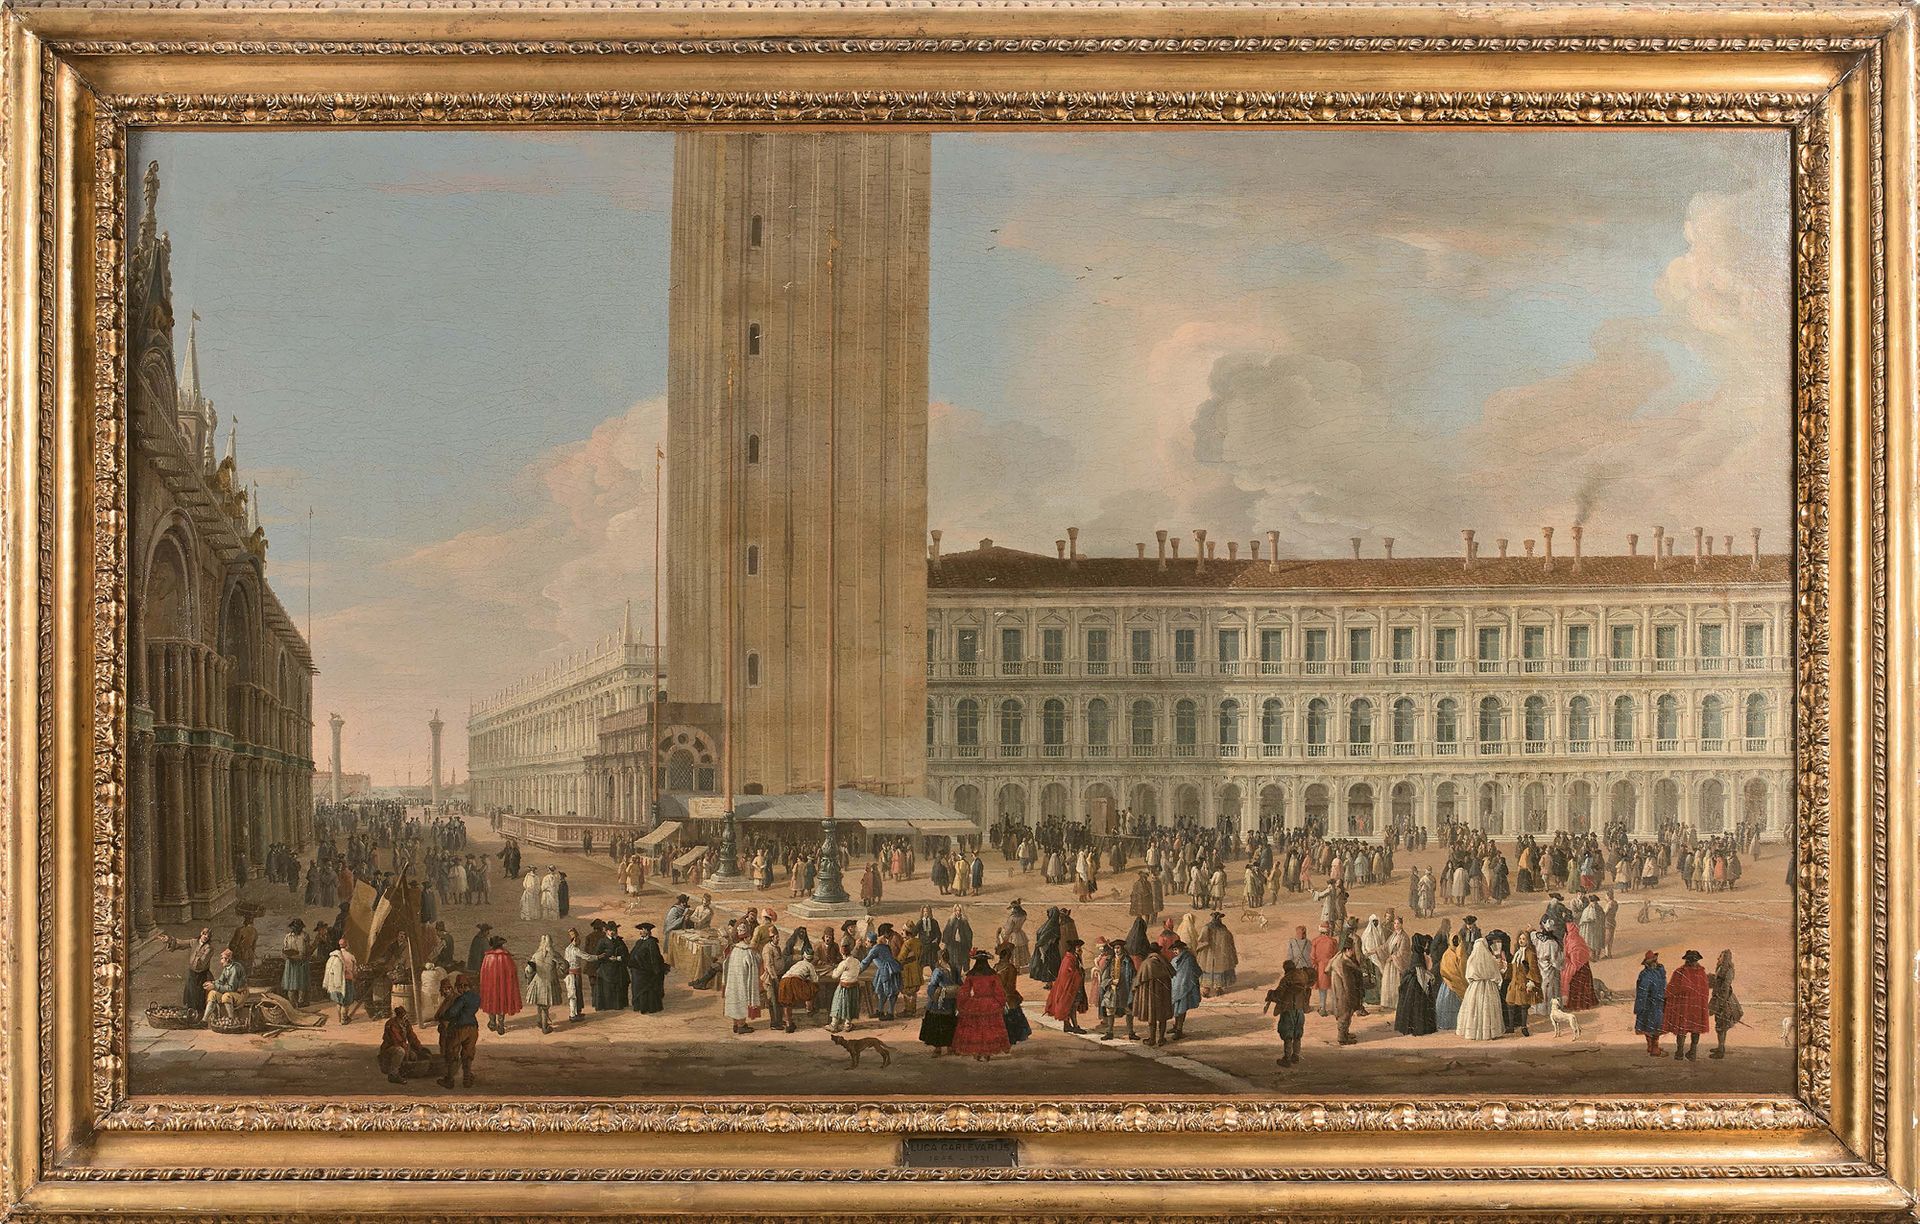 Lucas CARLEVARIJS (Udine 1663 - Venise 1730) 
圣马可广场和Piazzetta的景观



635,000欧元，包括&hellip;